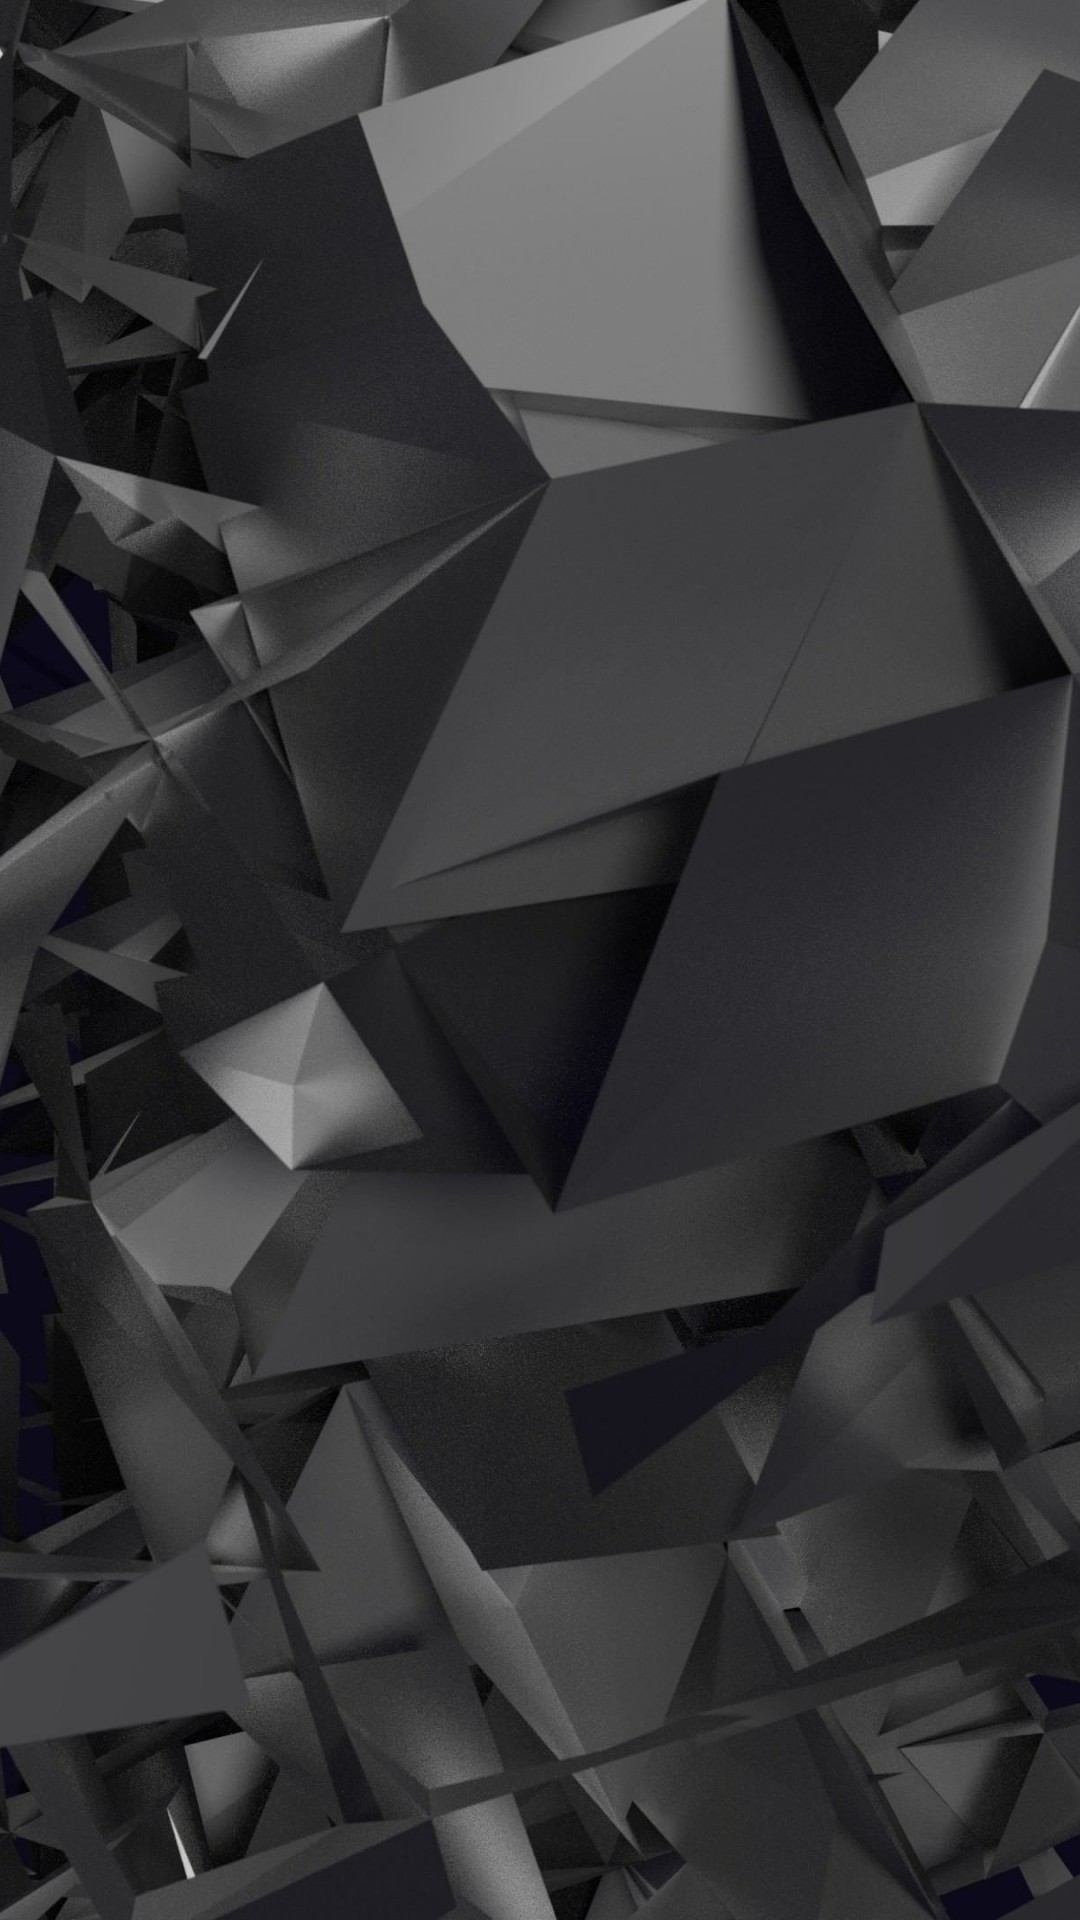 3D Geometry Wallpaper for Motorola Moto X